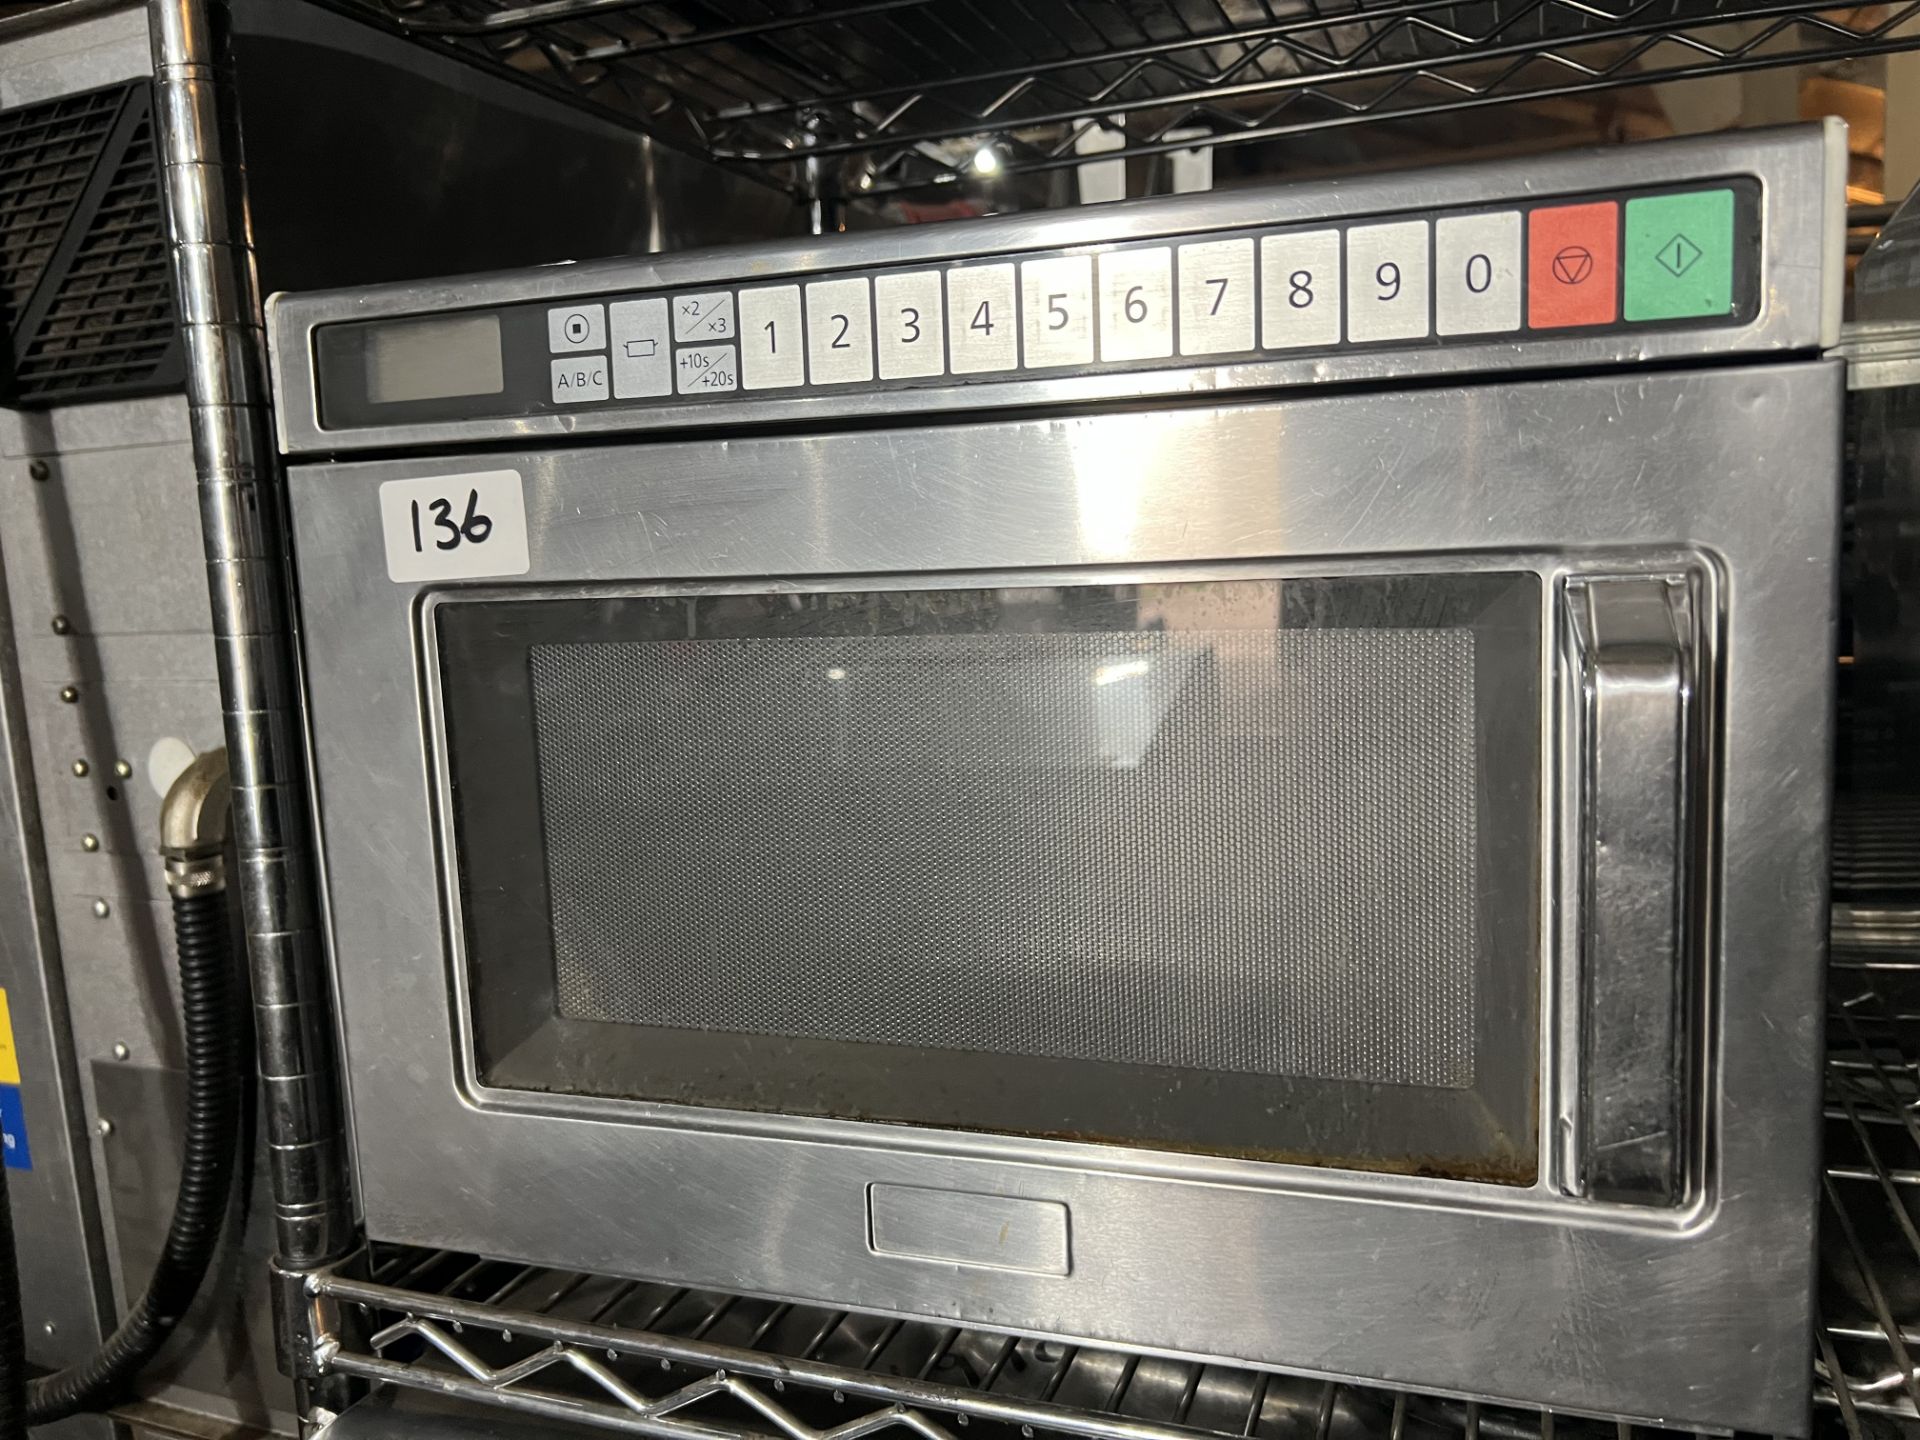 Panasonic NE 1853 commercial microwave